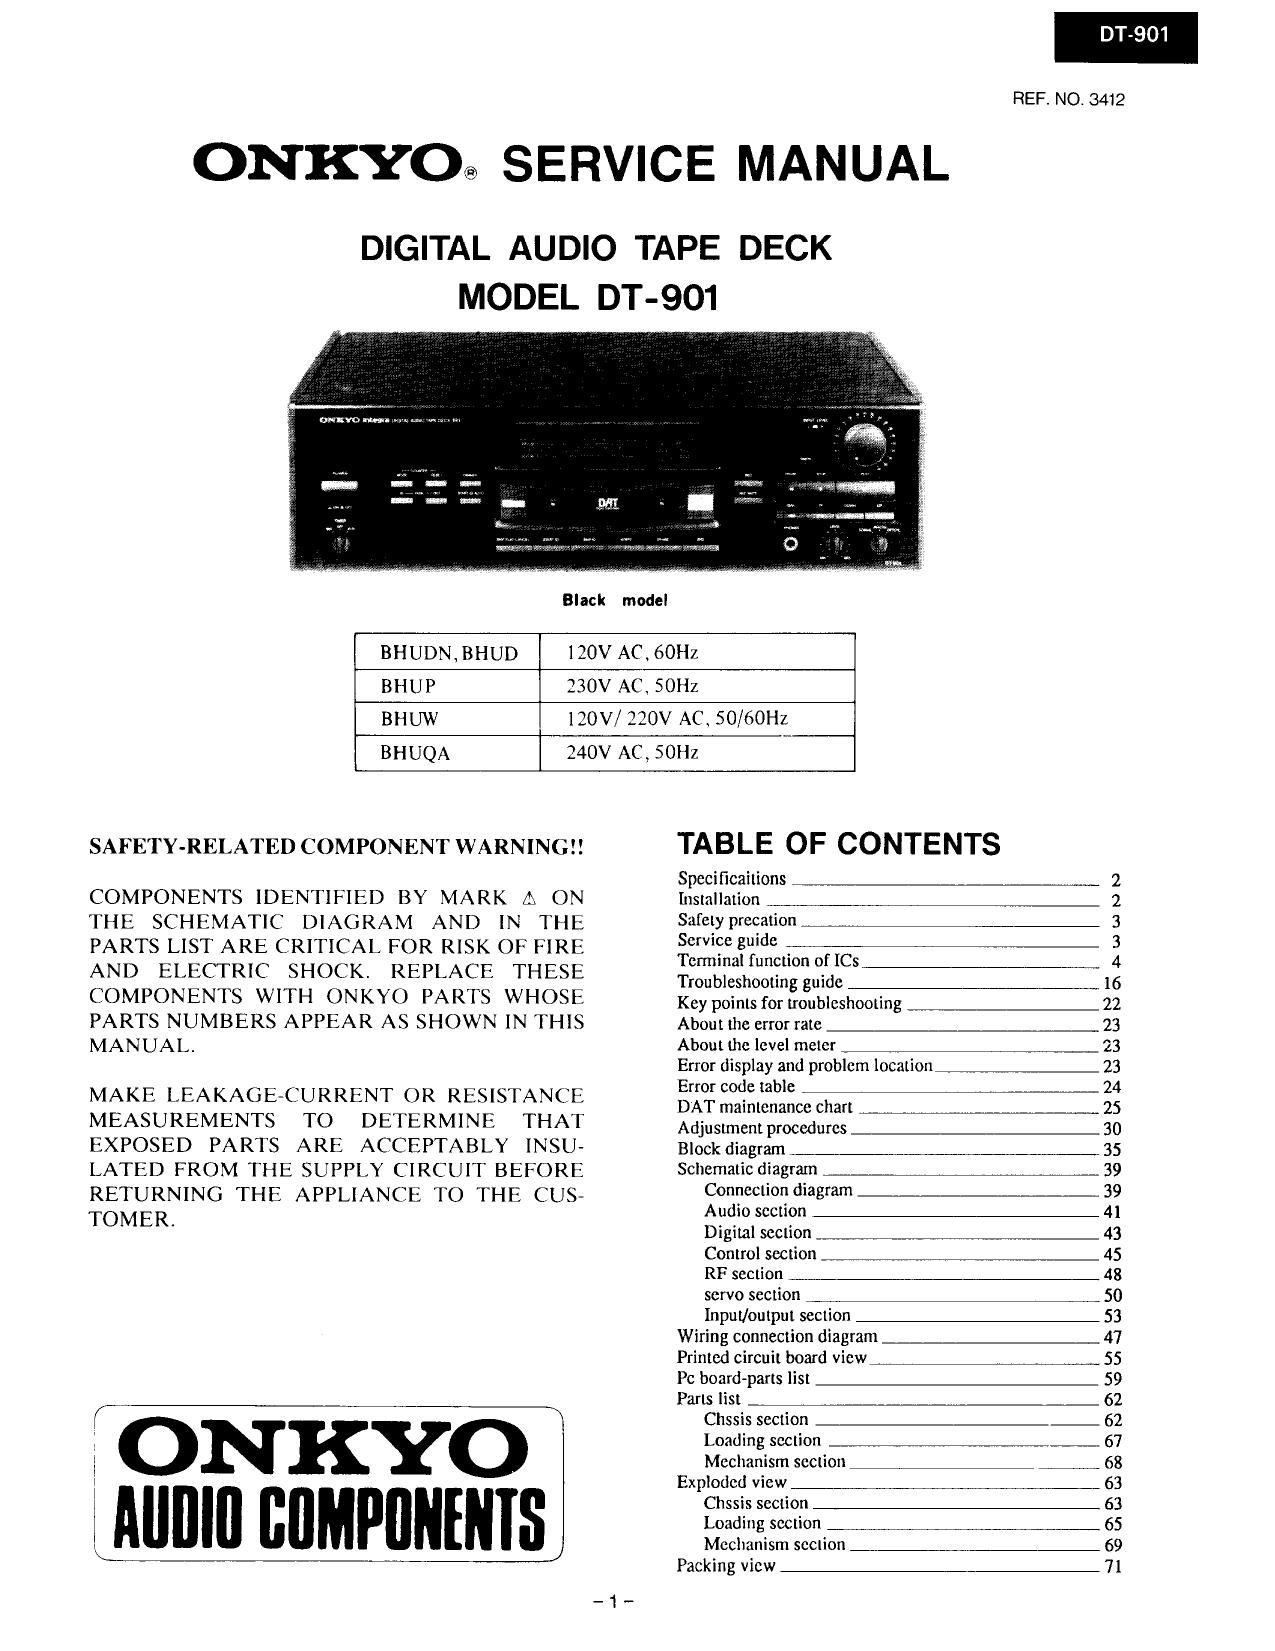 Onkyo DT 901 Service Manual